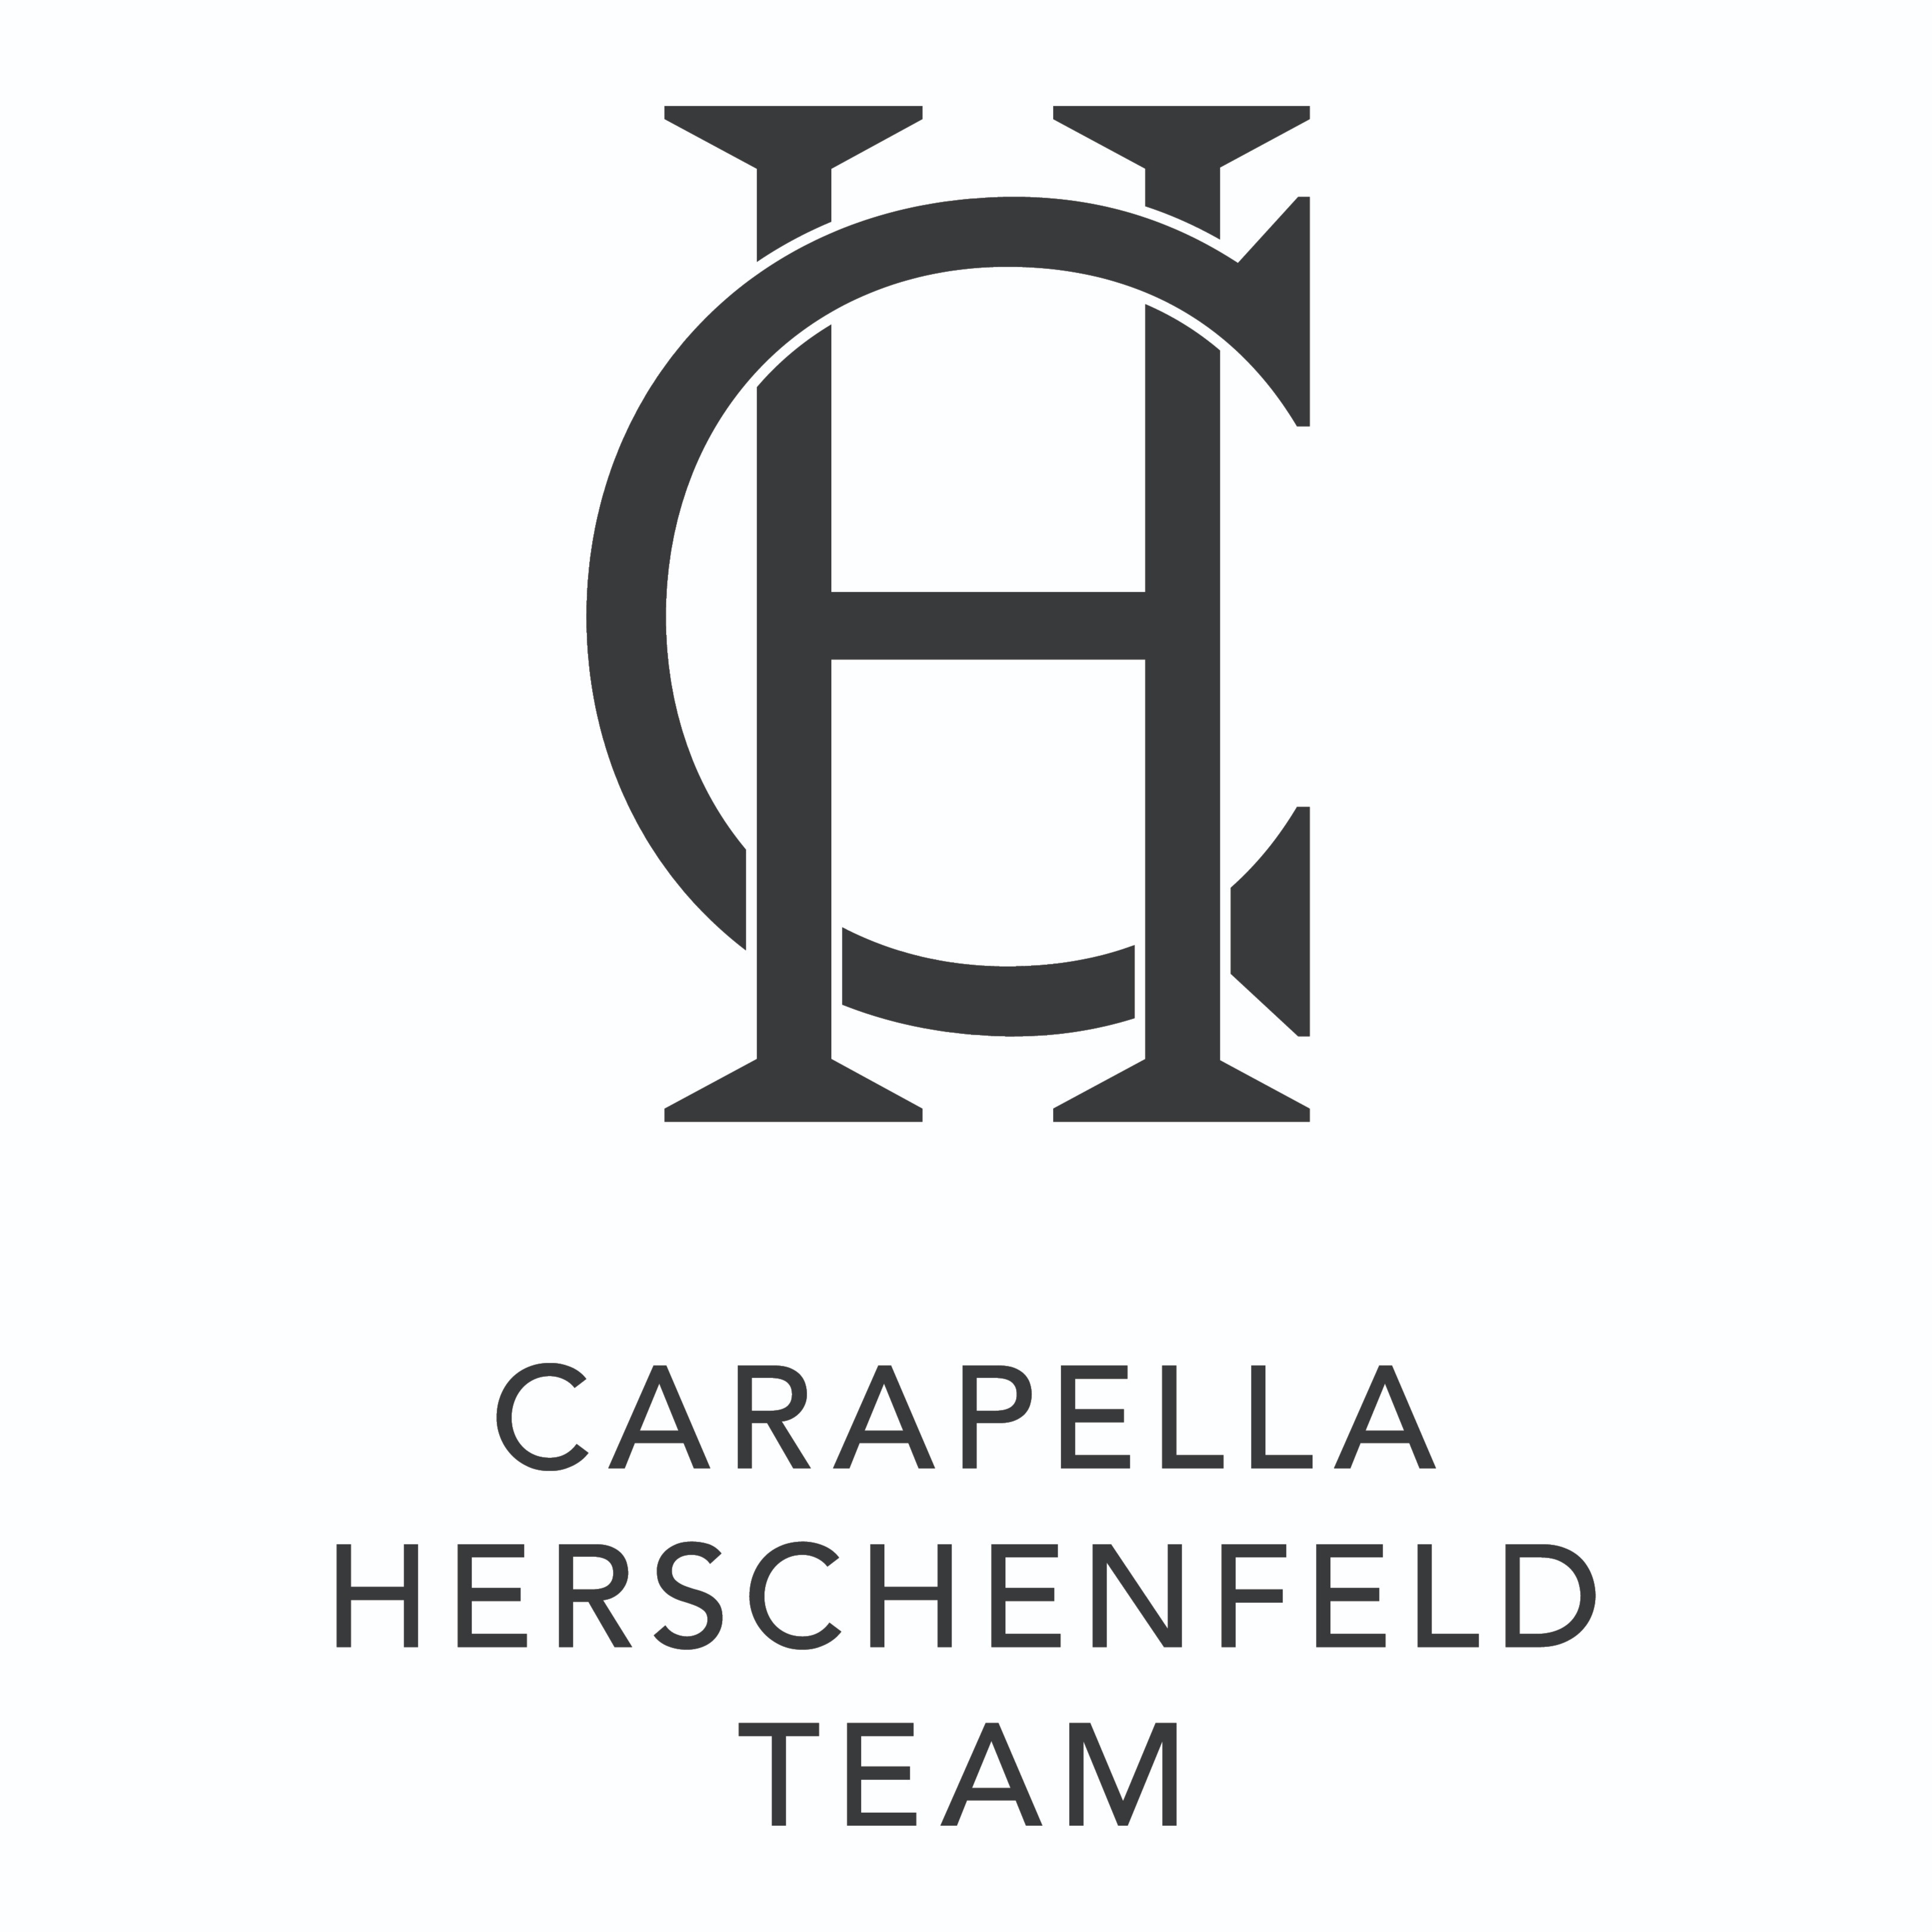 The Carapella Herschenfeld Team